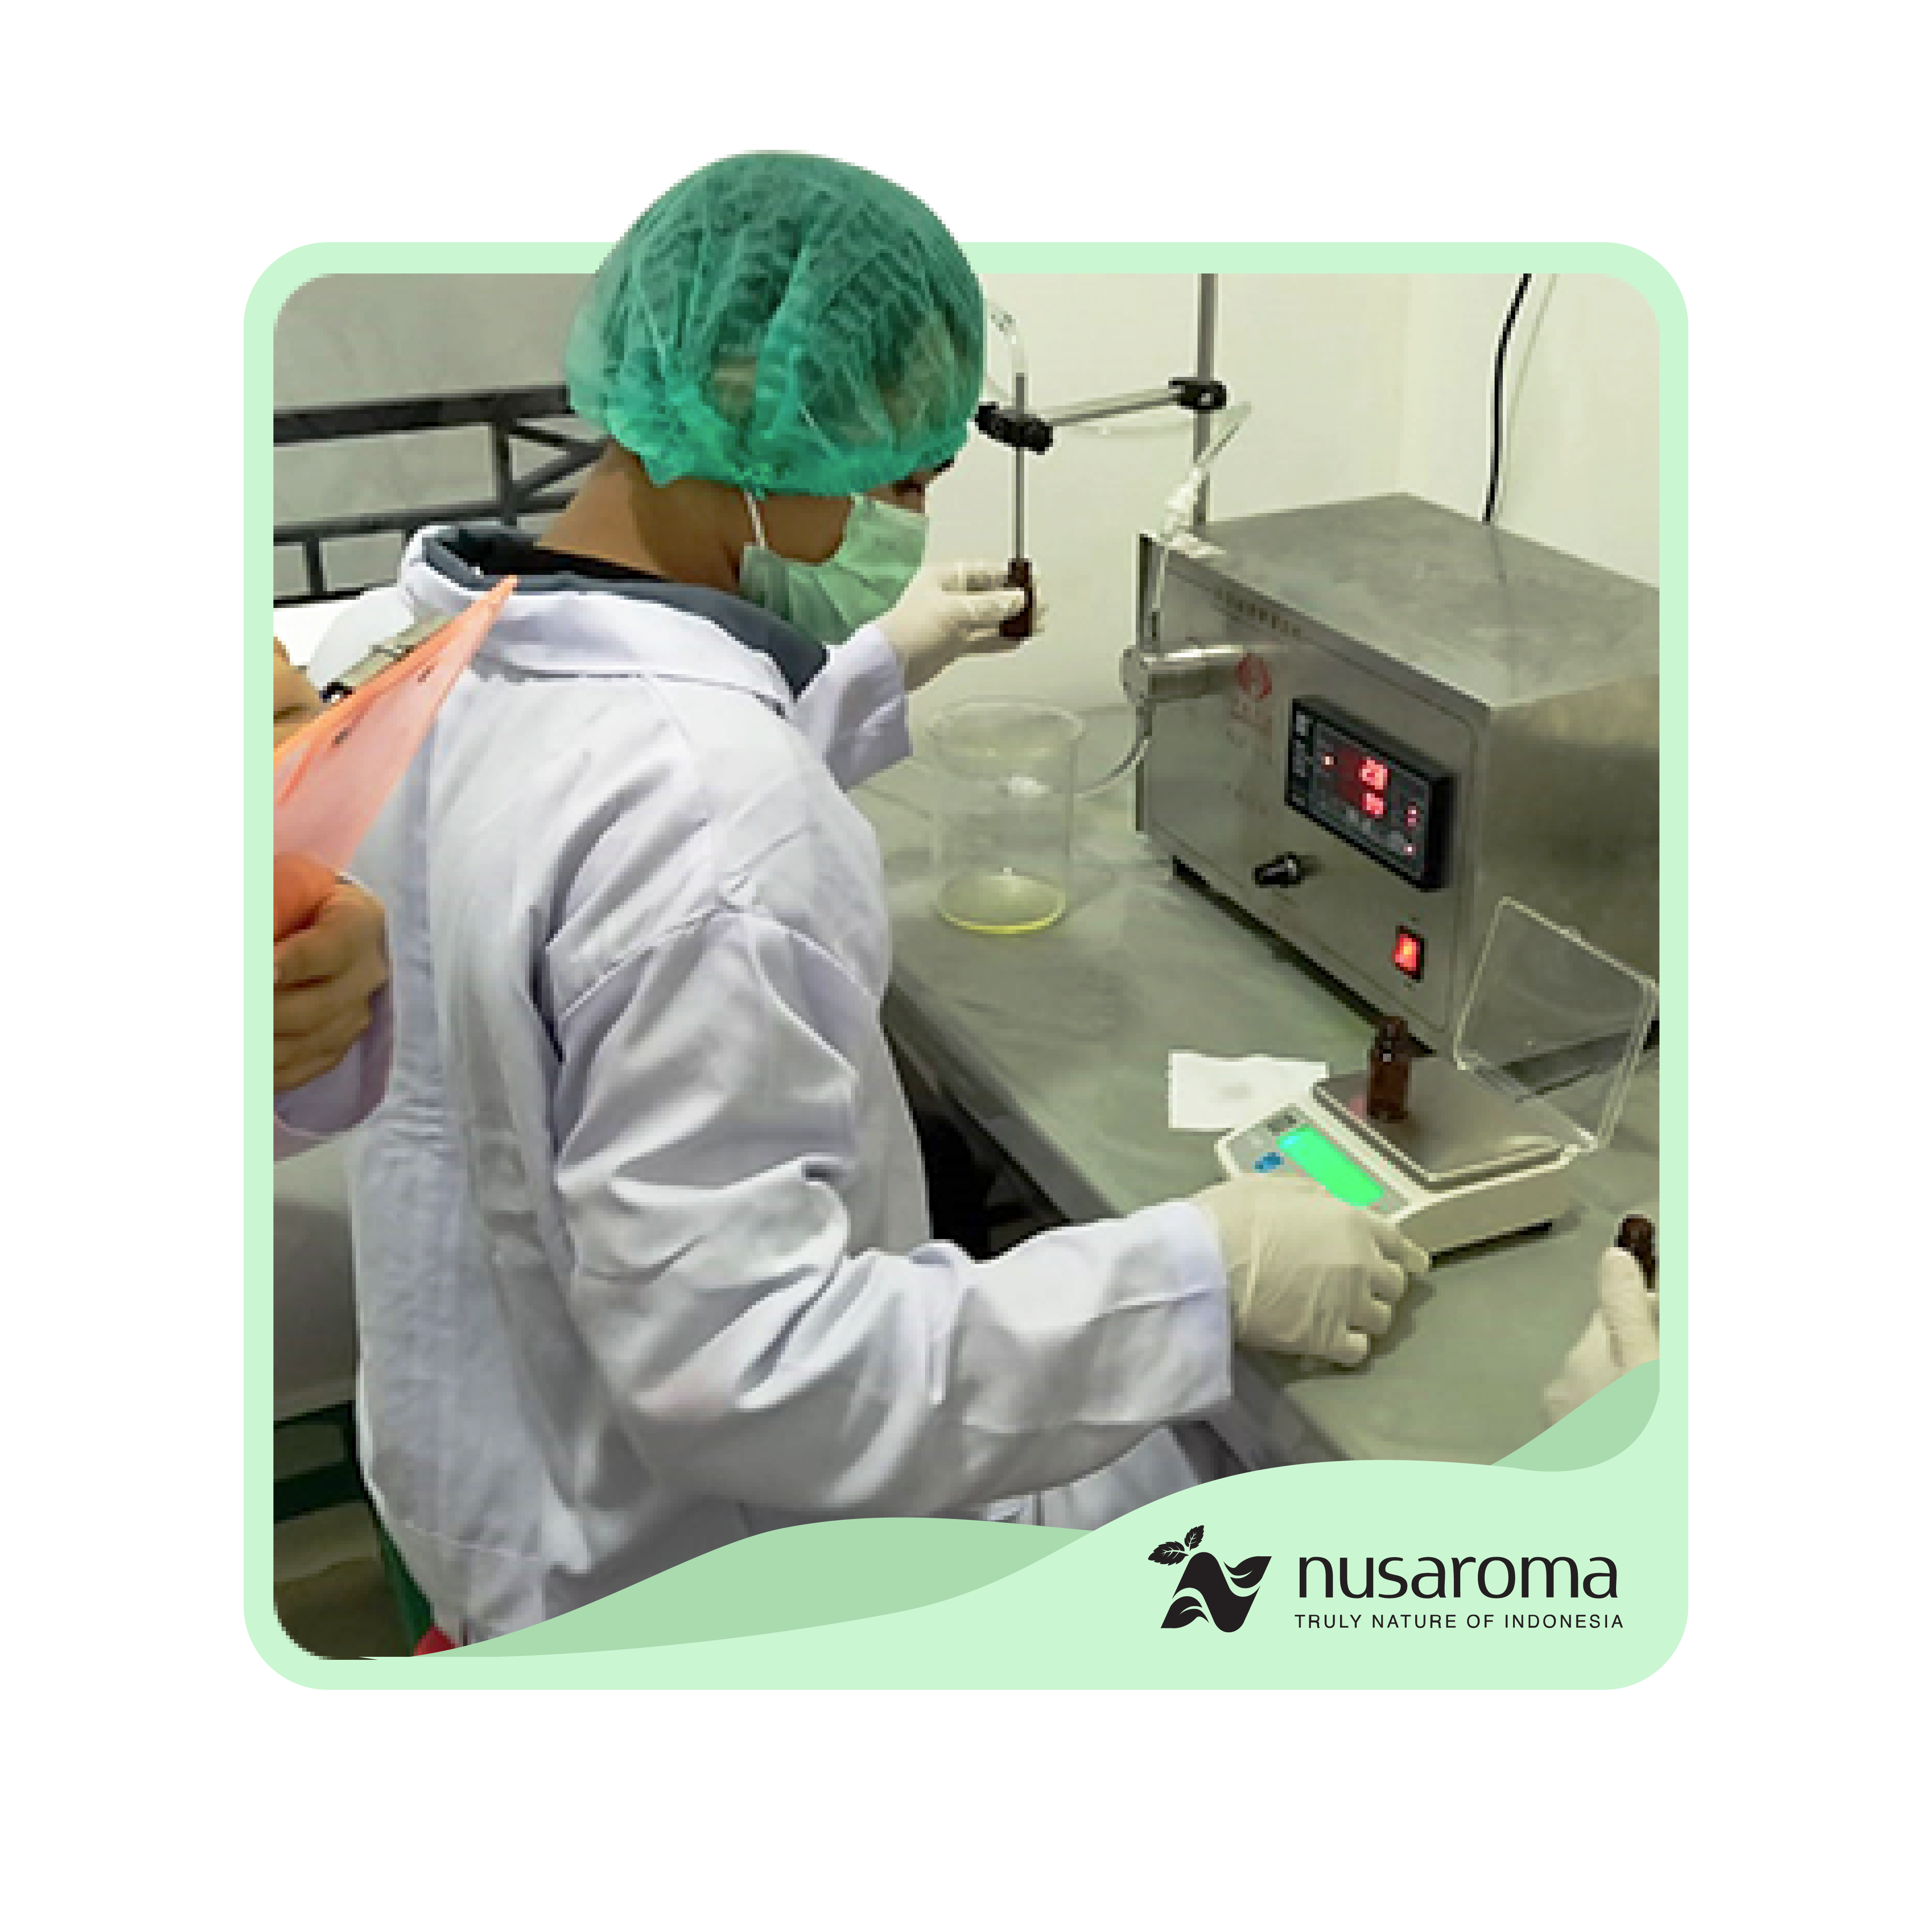 Nusaroma R&D process